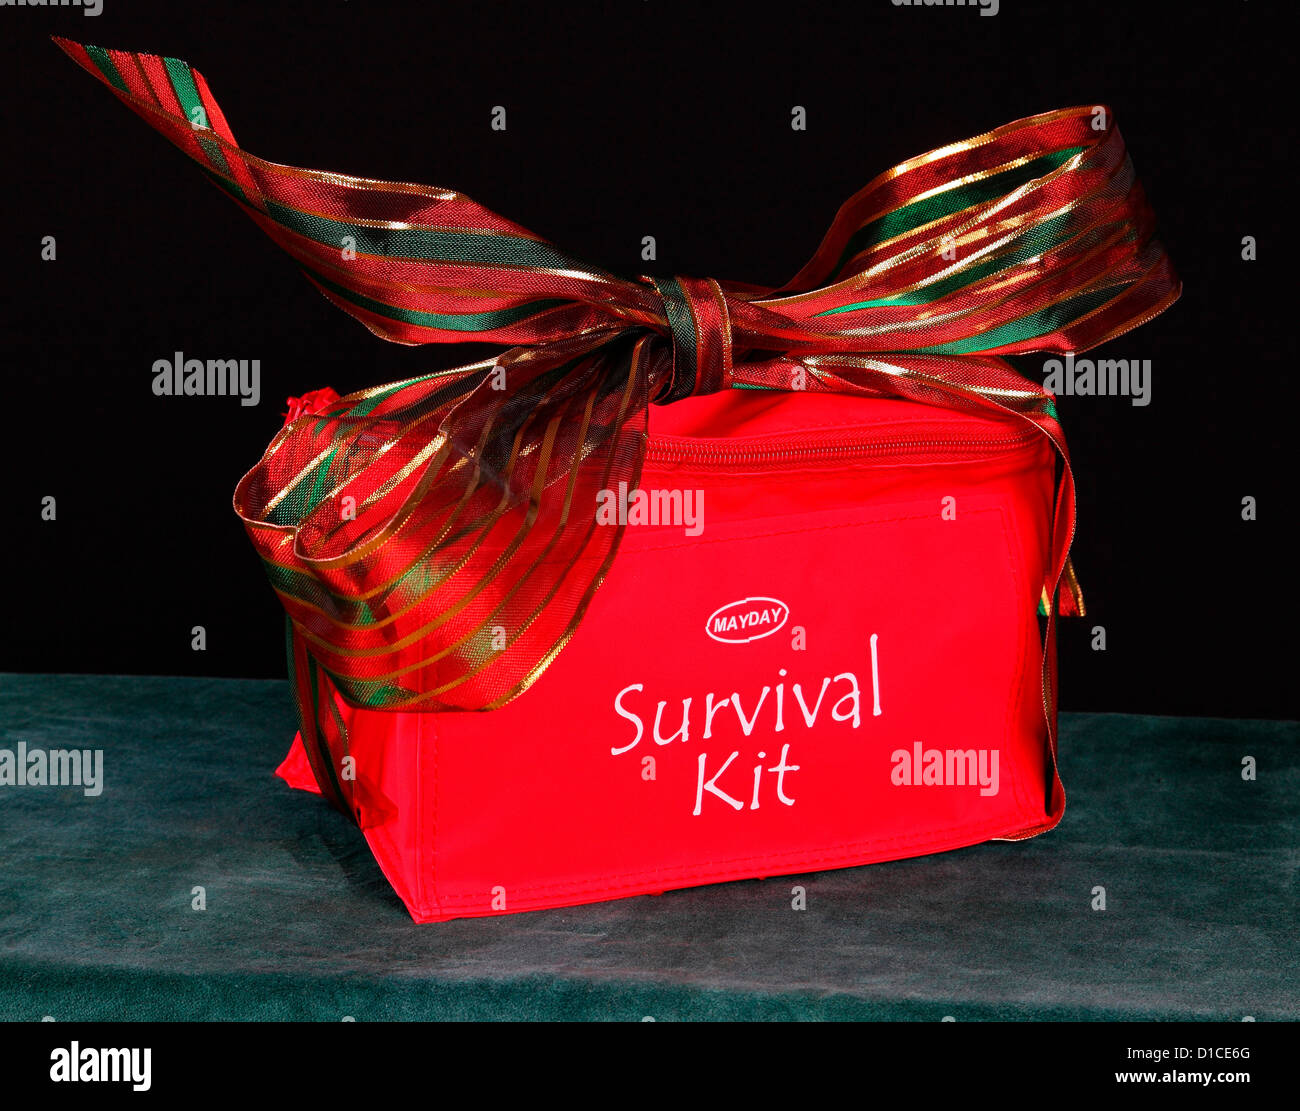 survival kit Stock Photo